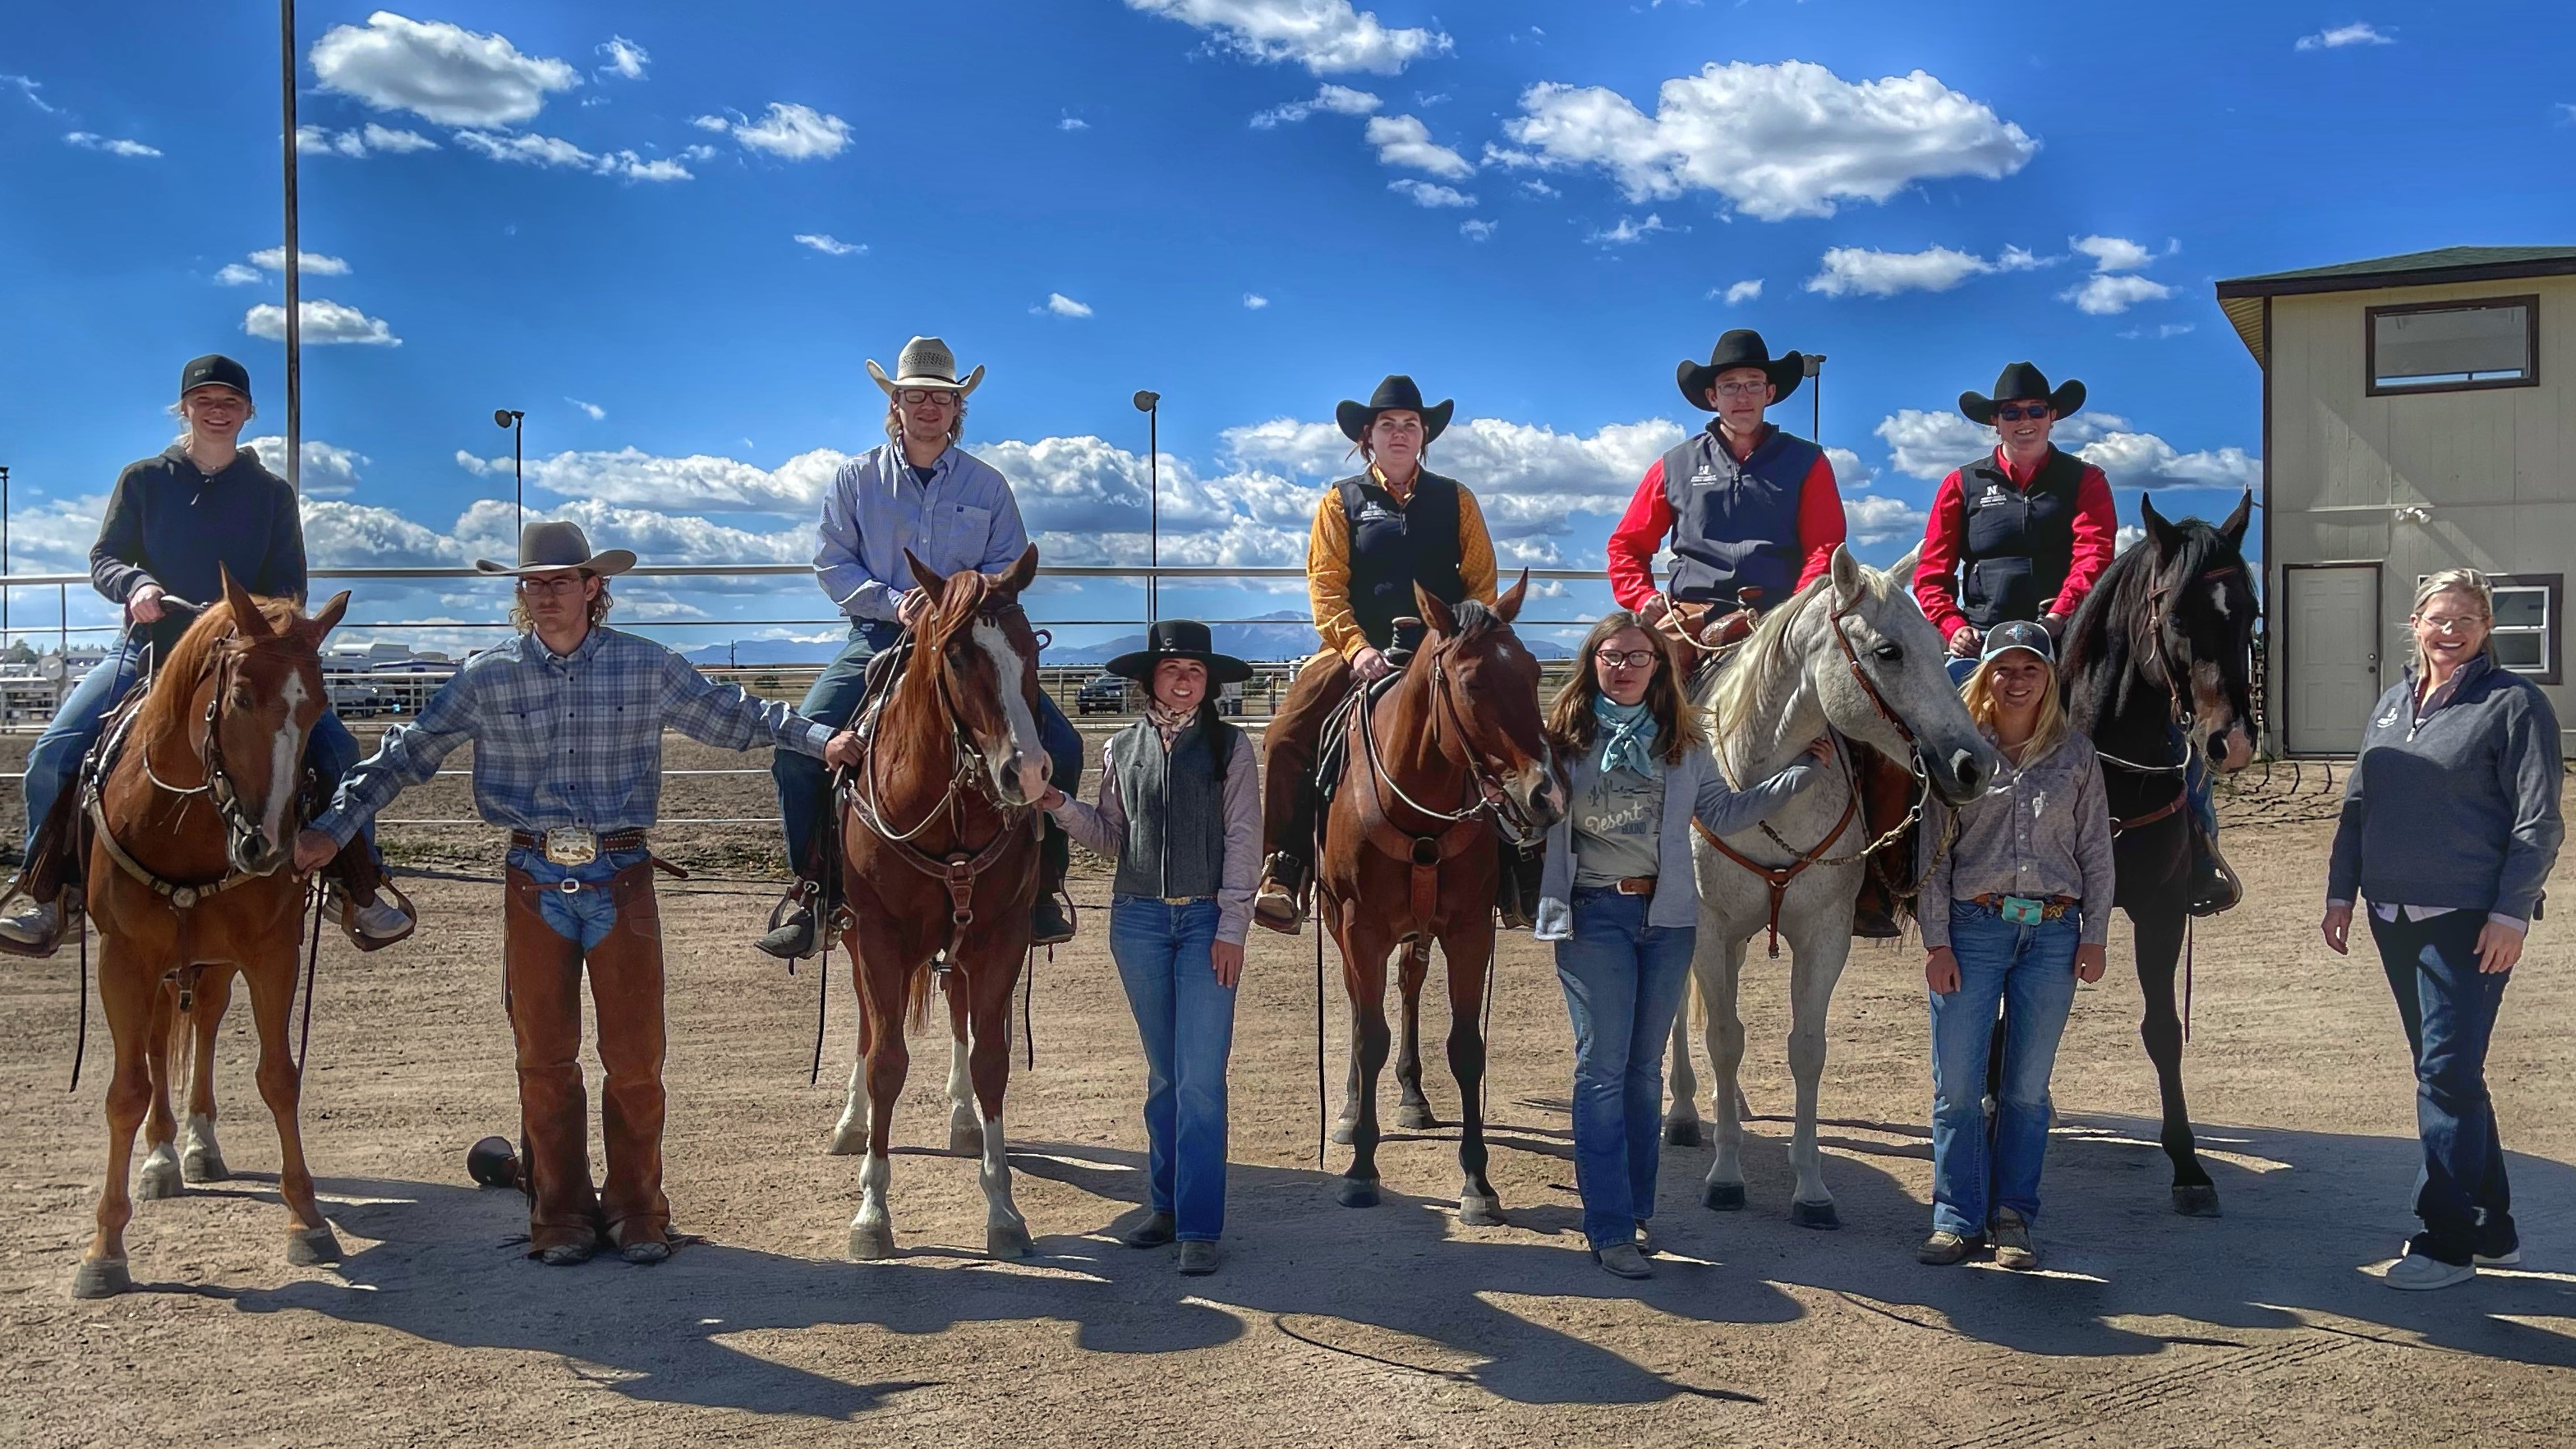 NCTA Ranch Horse Team members at Elbert, Colo., from left, Gwen Olberding, Ayden Long, Jack Berggren, Kirstin Cawthra, Devry Bellomy, Emma Yarolimek, Cauy Bennett, Paige Stamper, Jessica Burghardt and Coach Joanna Hergenreder. (Ranch Horse Team photo).